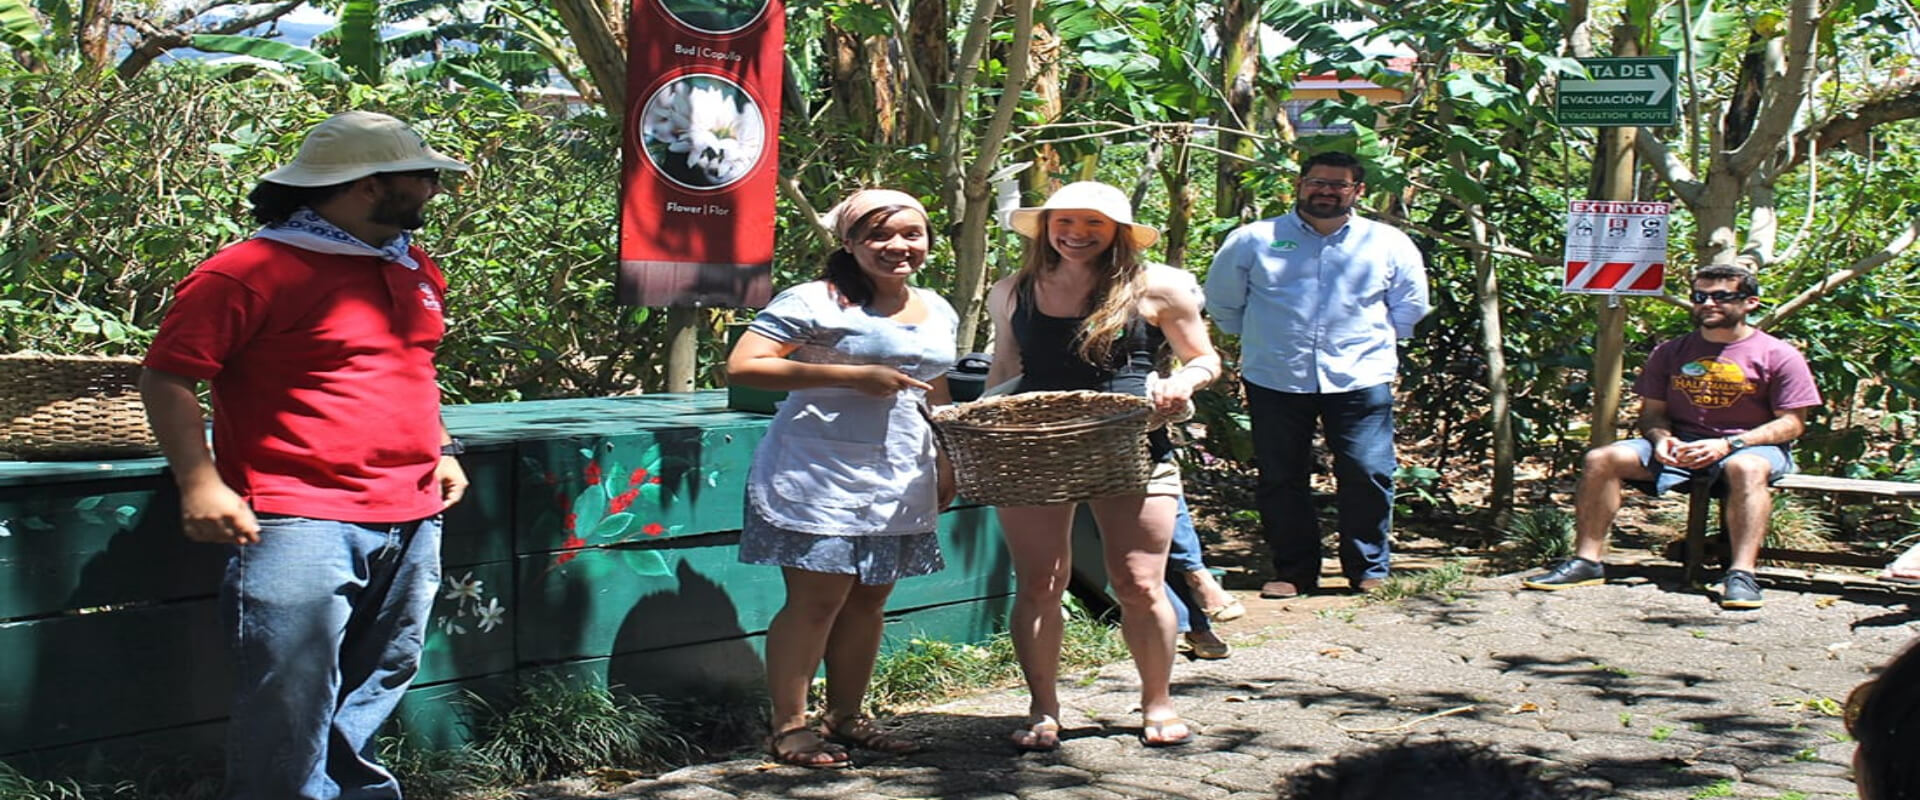 Tour de café y canopy en San José  | Costa Rica Jade Tours